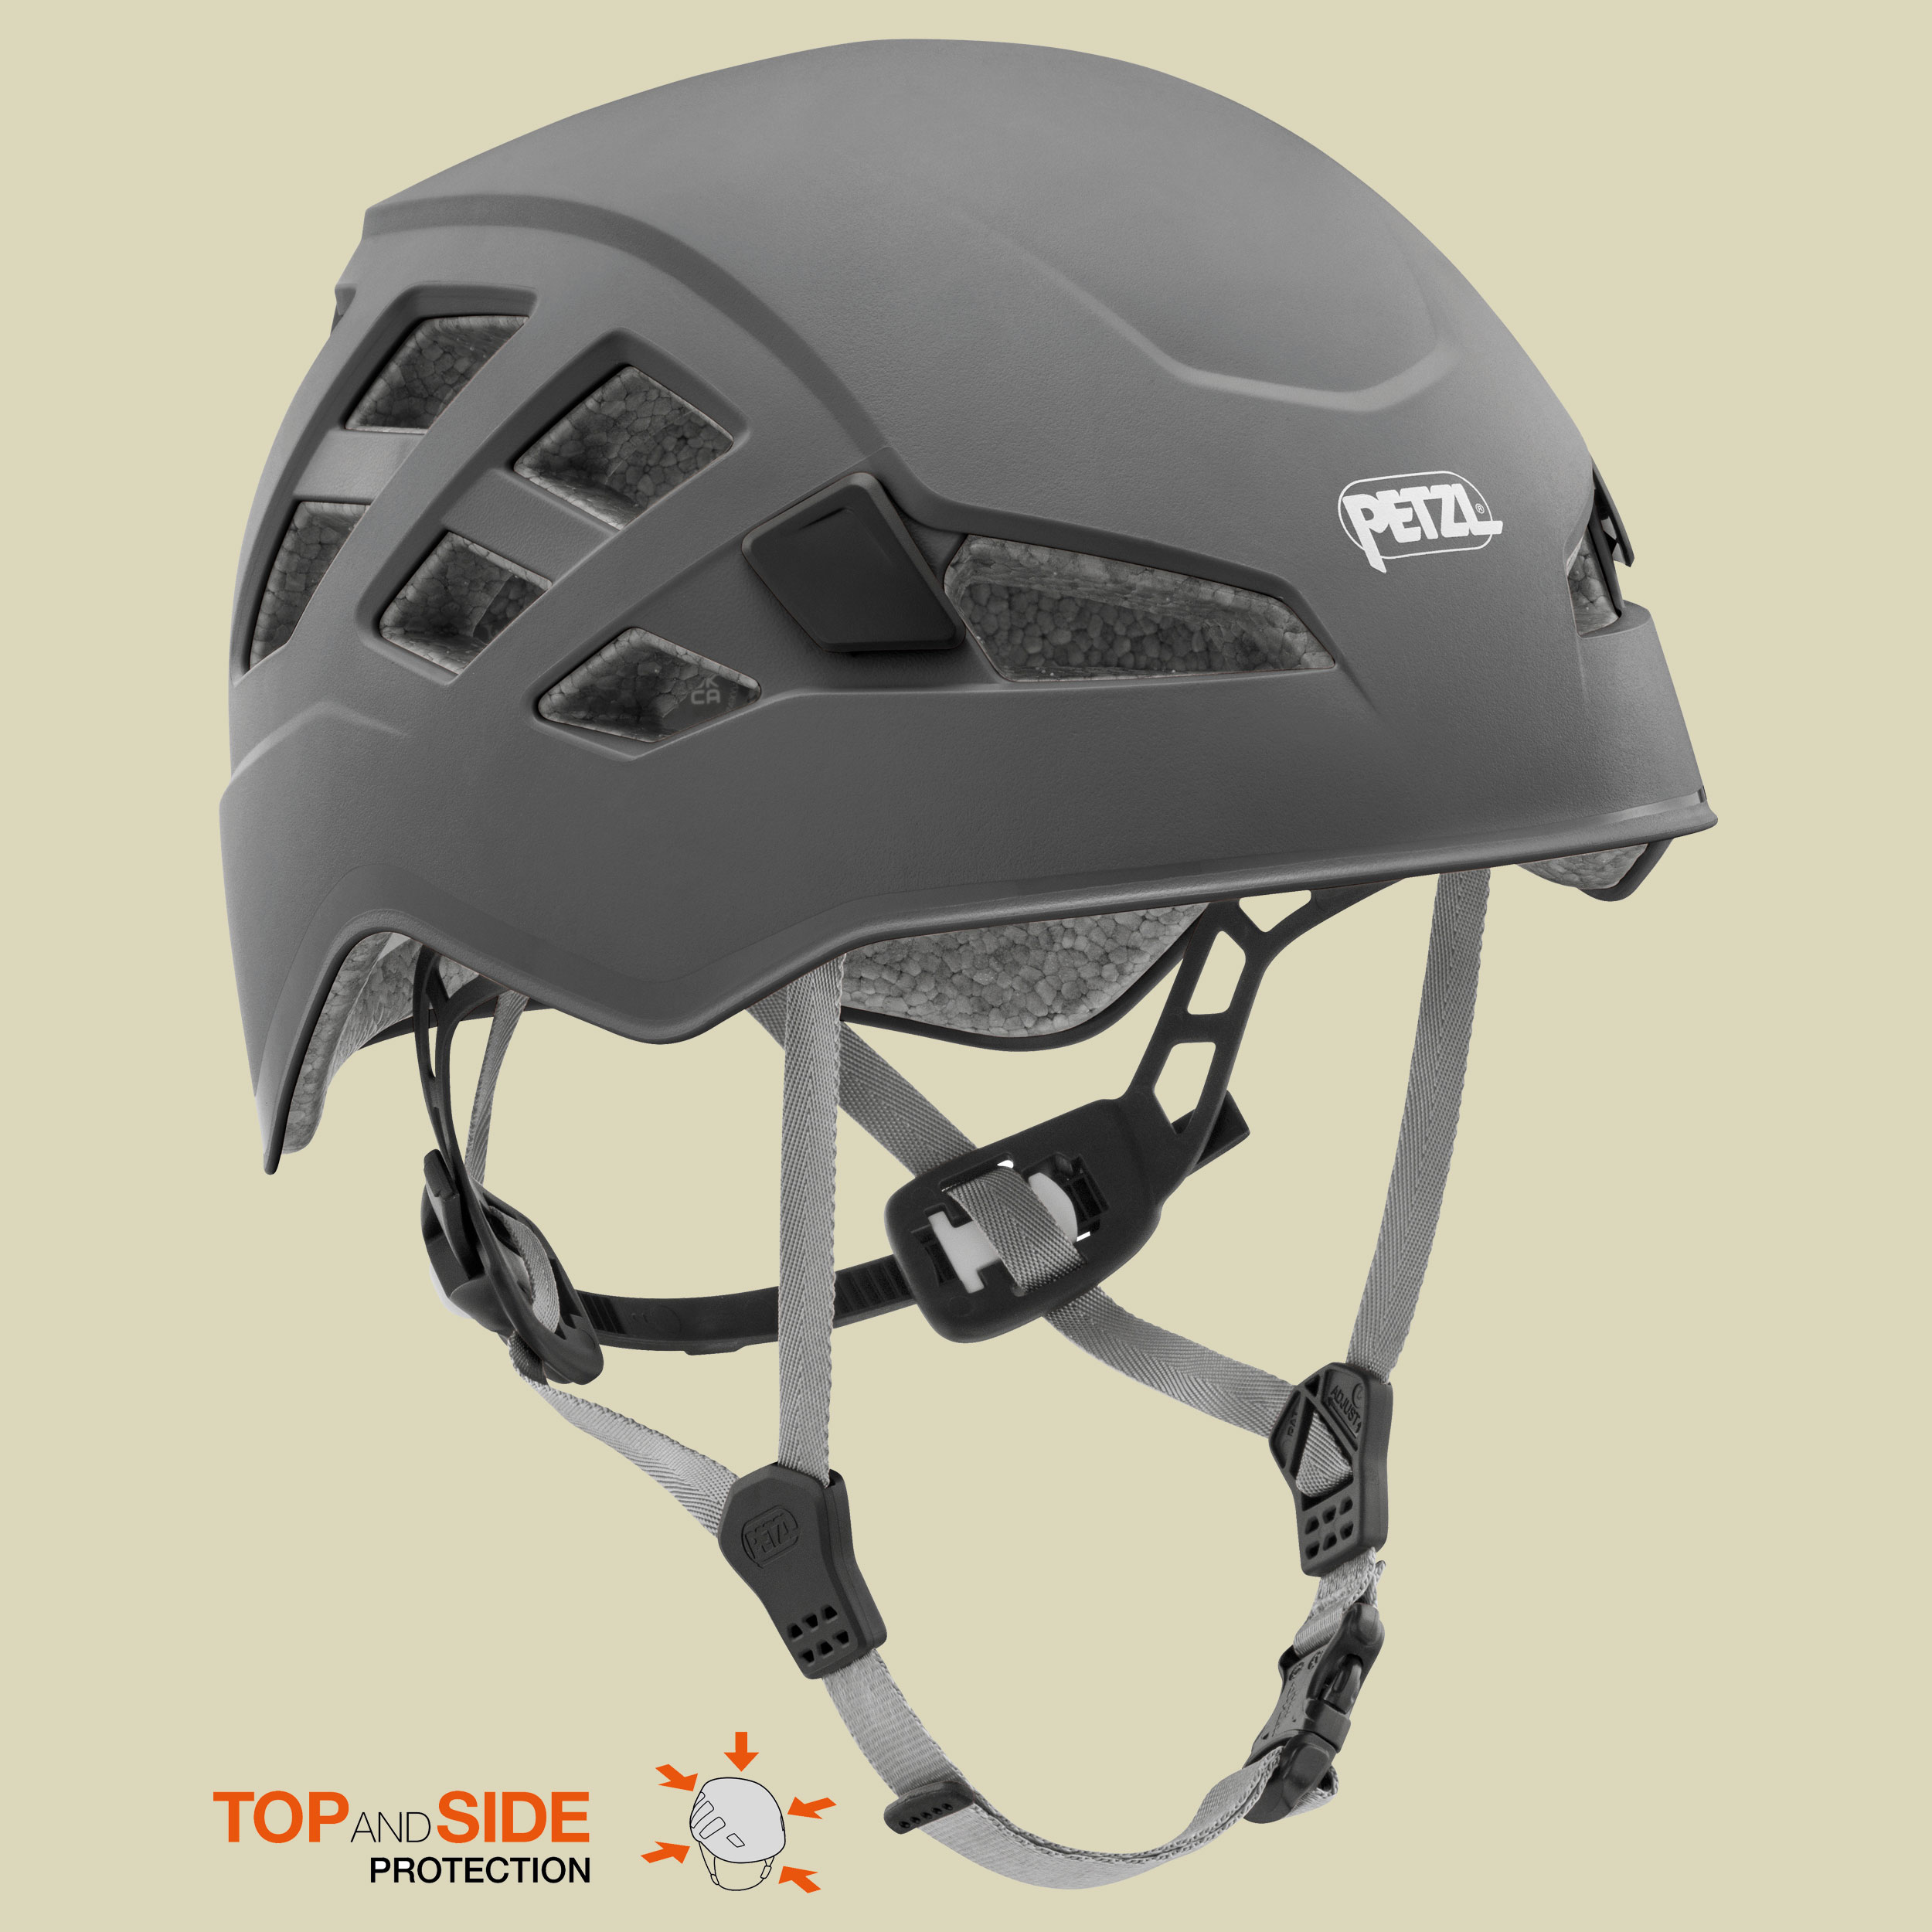 Boreo Helm Größe M/L Farbe grau